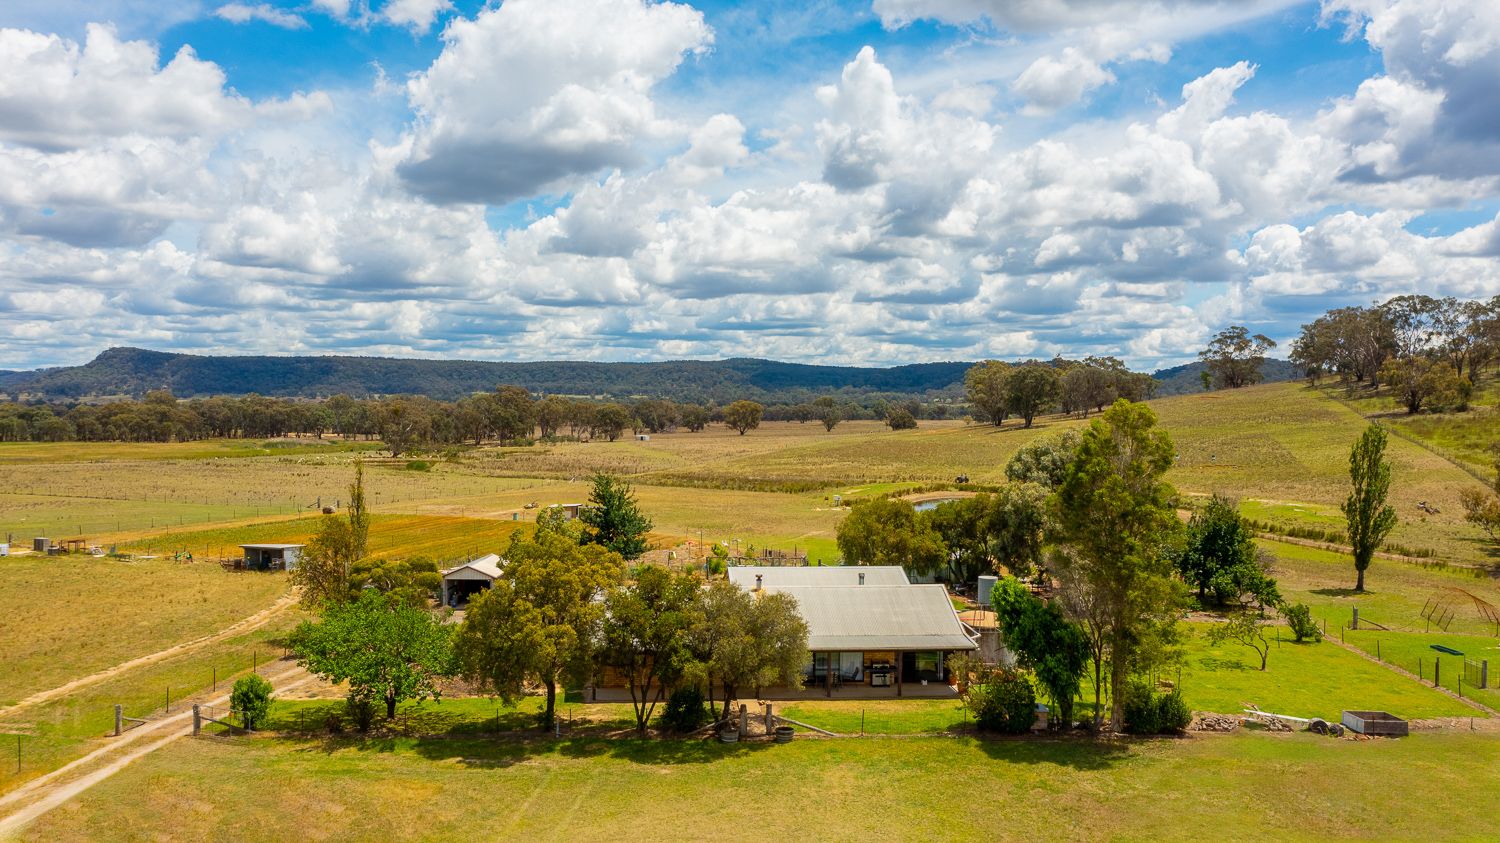 2 bedrooms Rural in 84 Iron Barks Road MUDGEE NSW, 2850